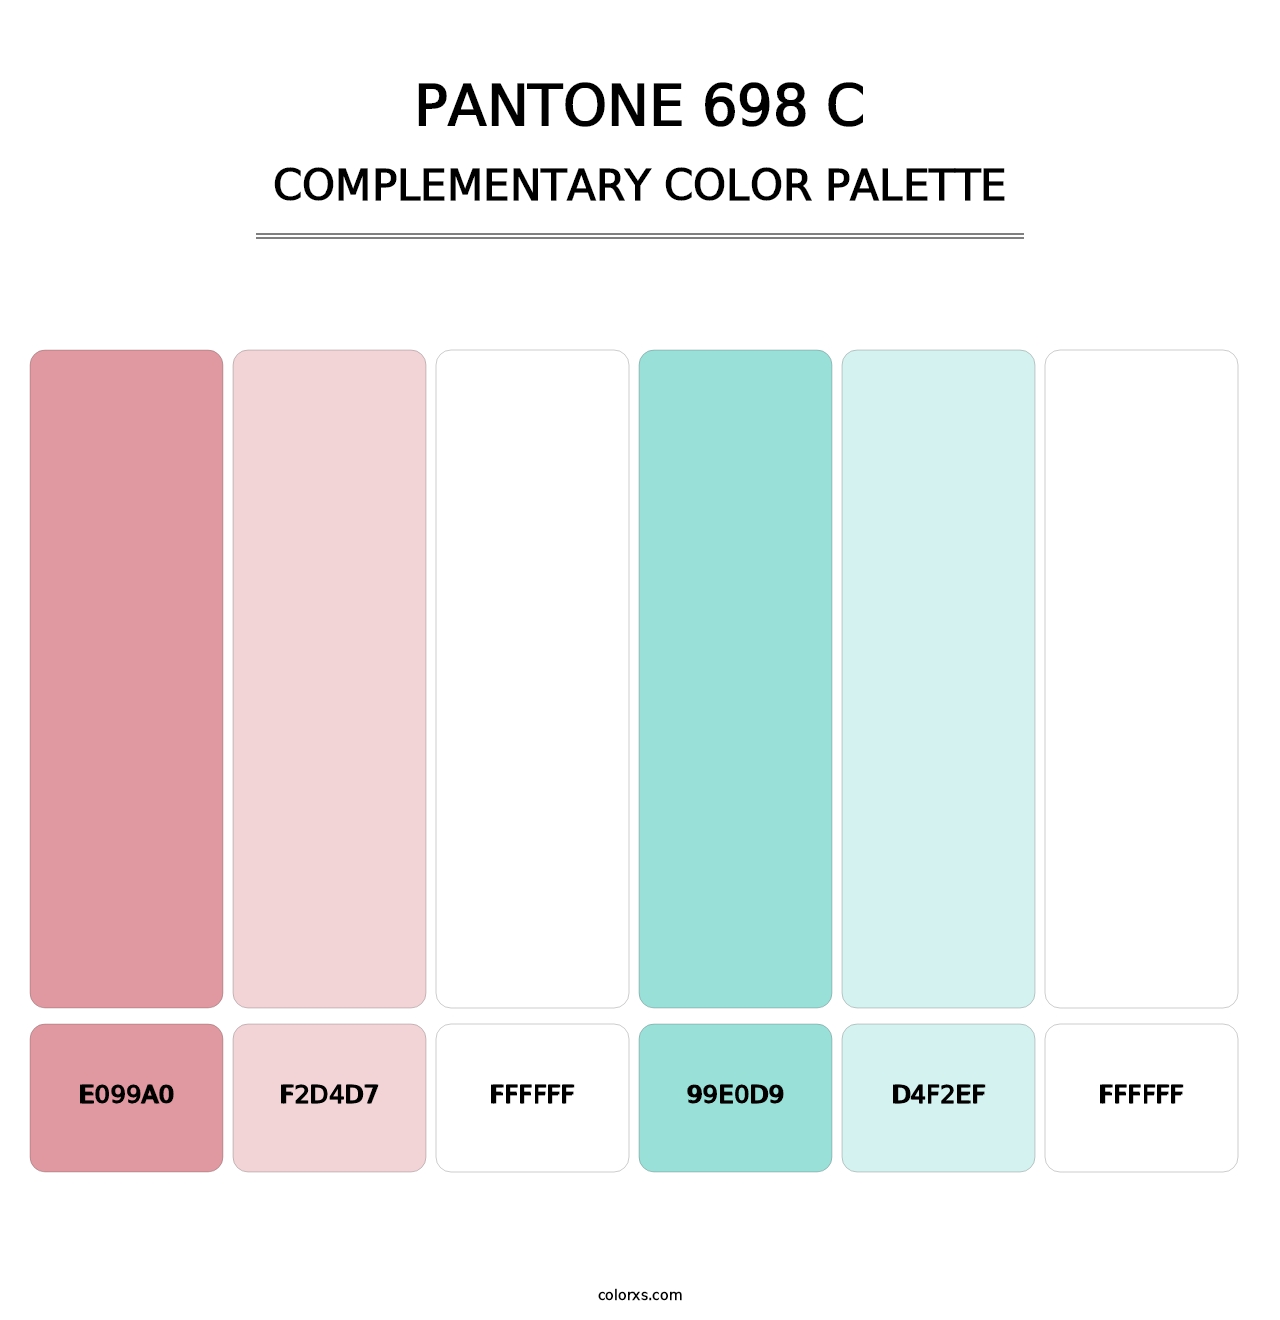 PANTONE 698 C - Complementary Color Palette